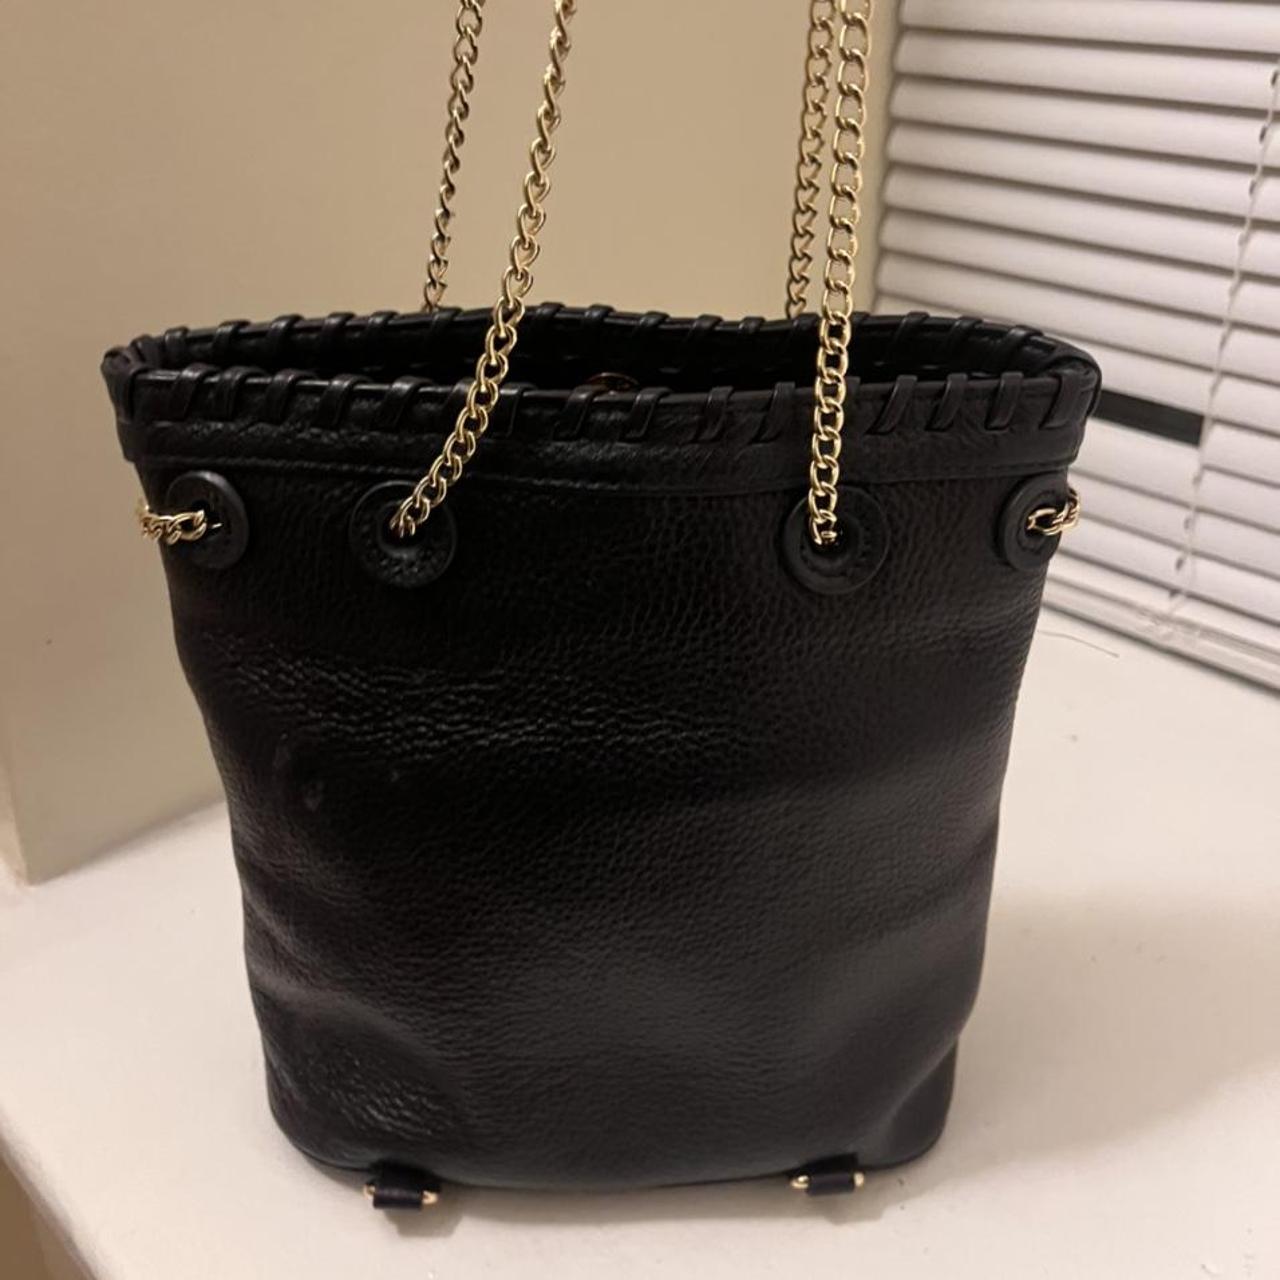 Product Image 1 - Leather Zenith Handbag

Super cute bag